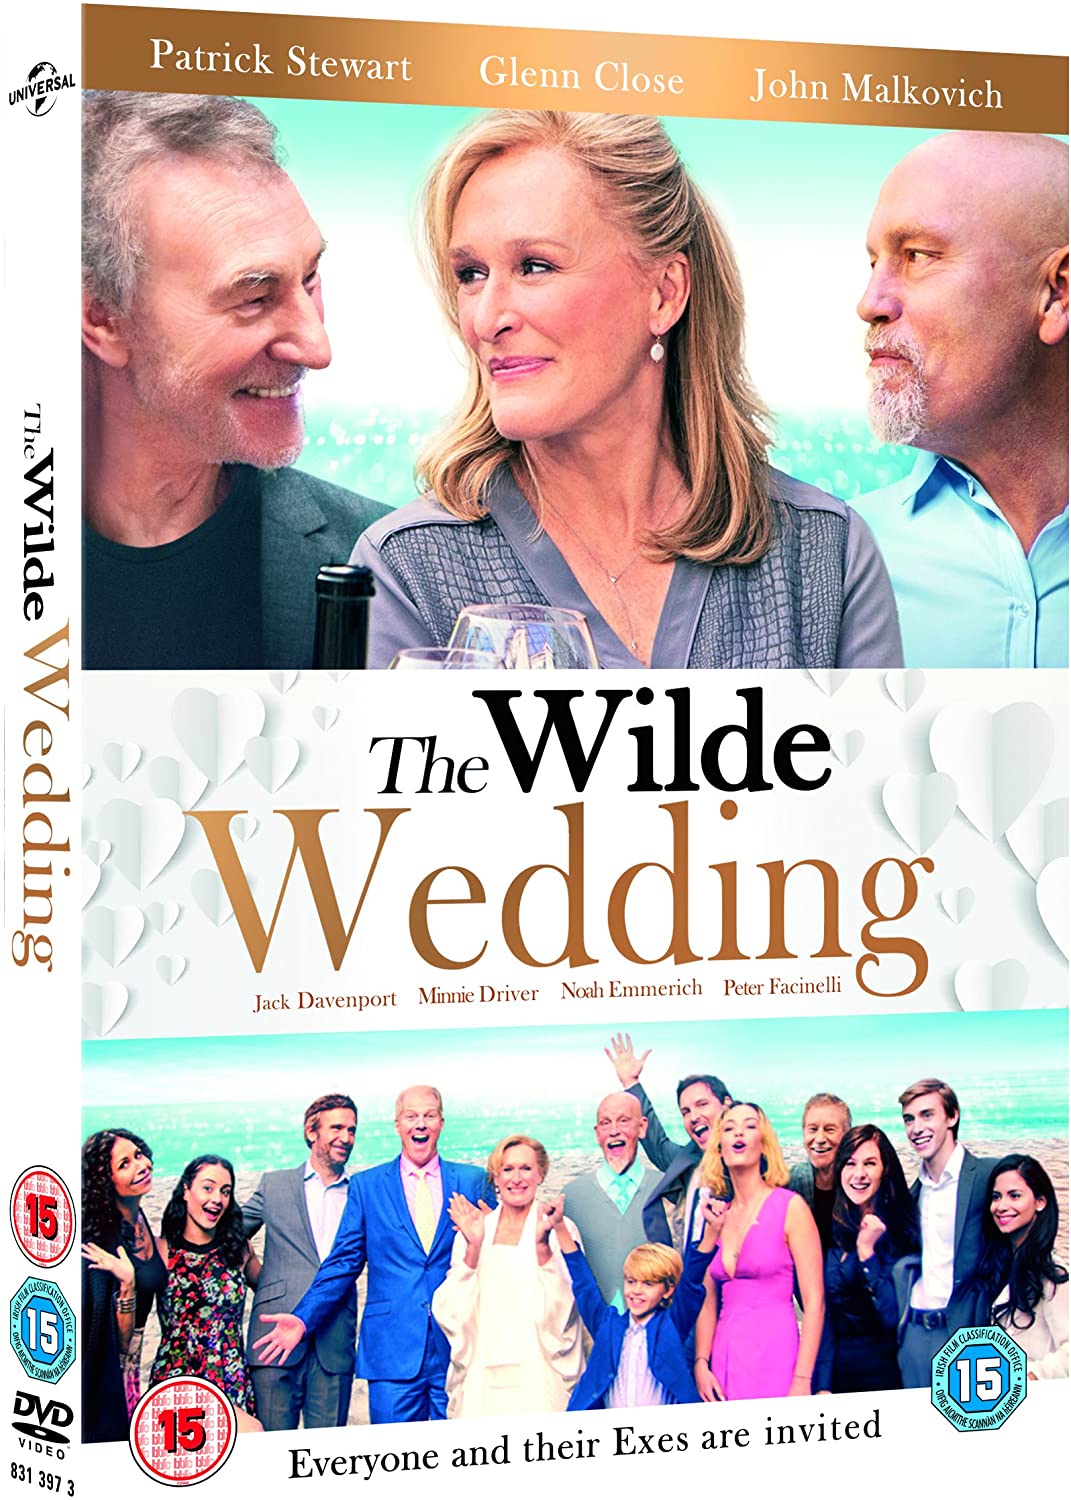 The Wilde Wedding (DVD)